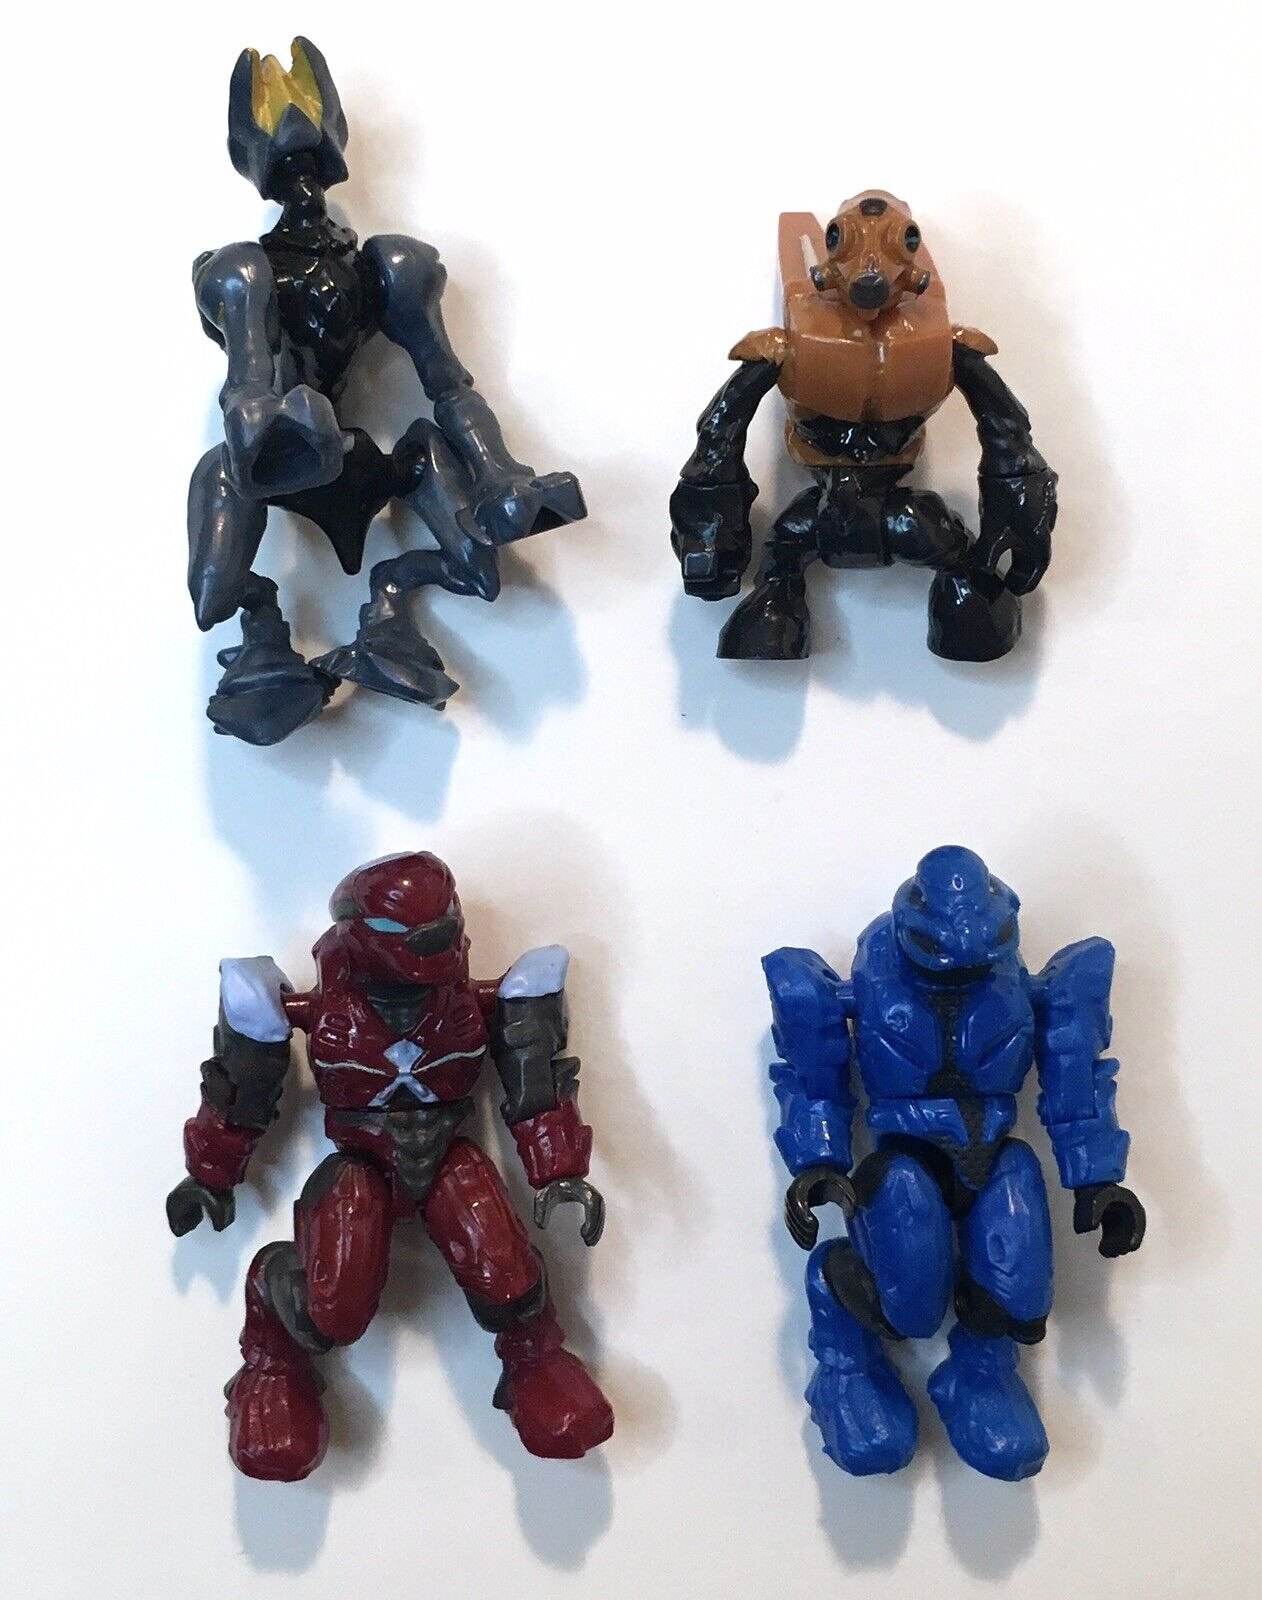 Lot of 4 Halo Mega Blocks Mini Figures Assorted Unknown Names - $12.00